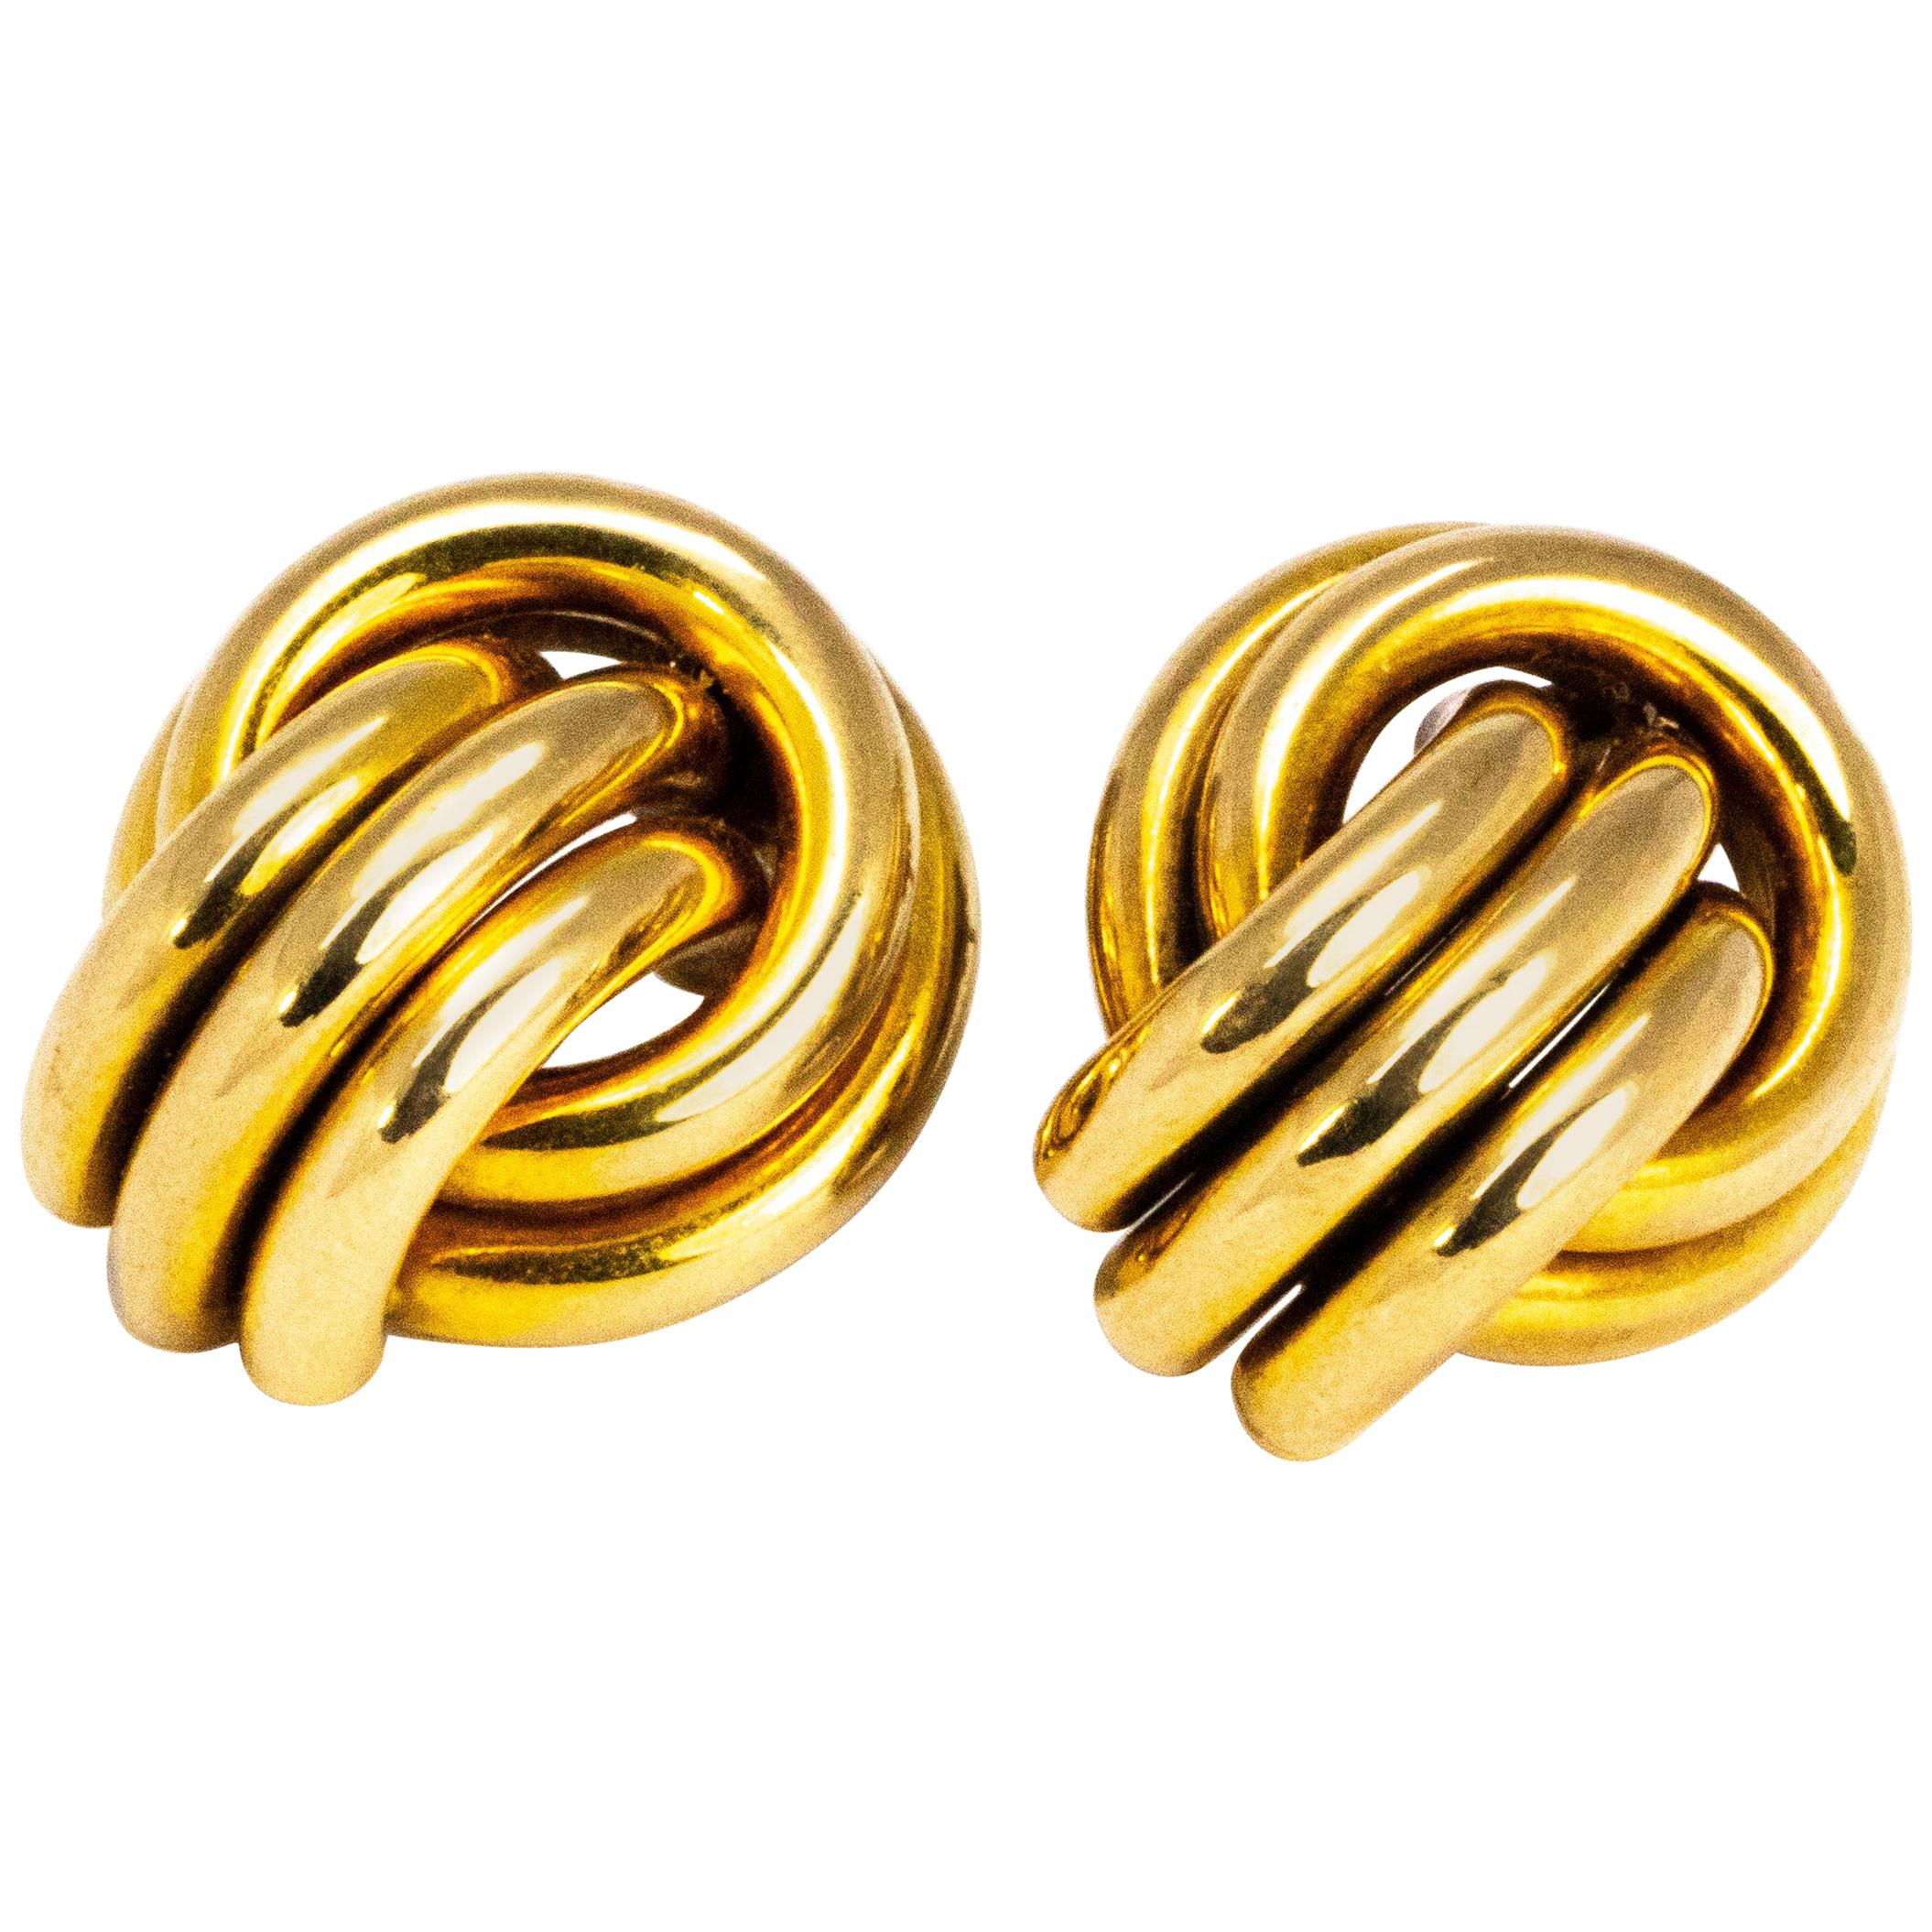 Knot Detail 9 Carat Gold Stud Earrings